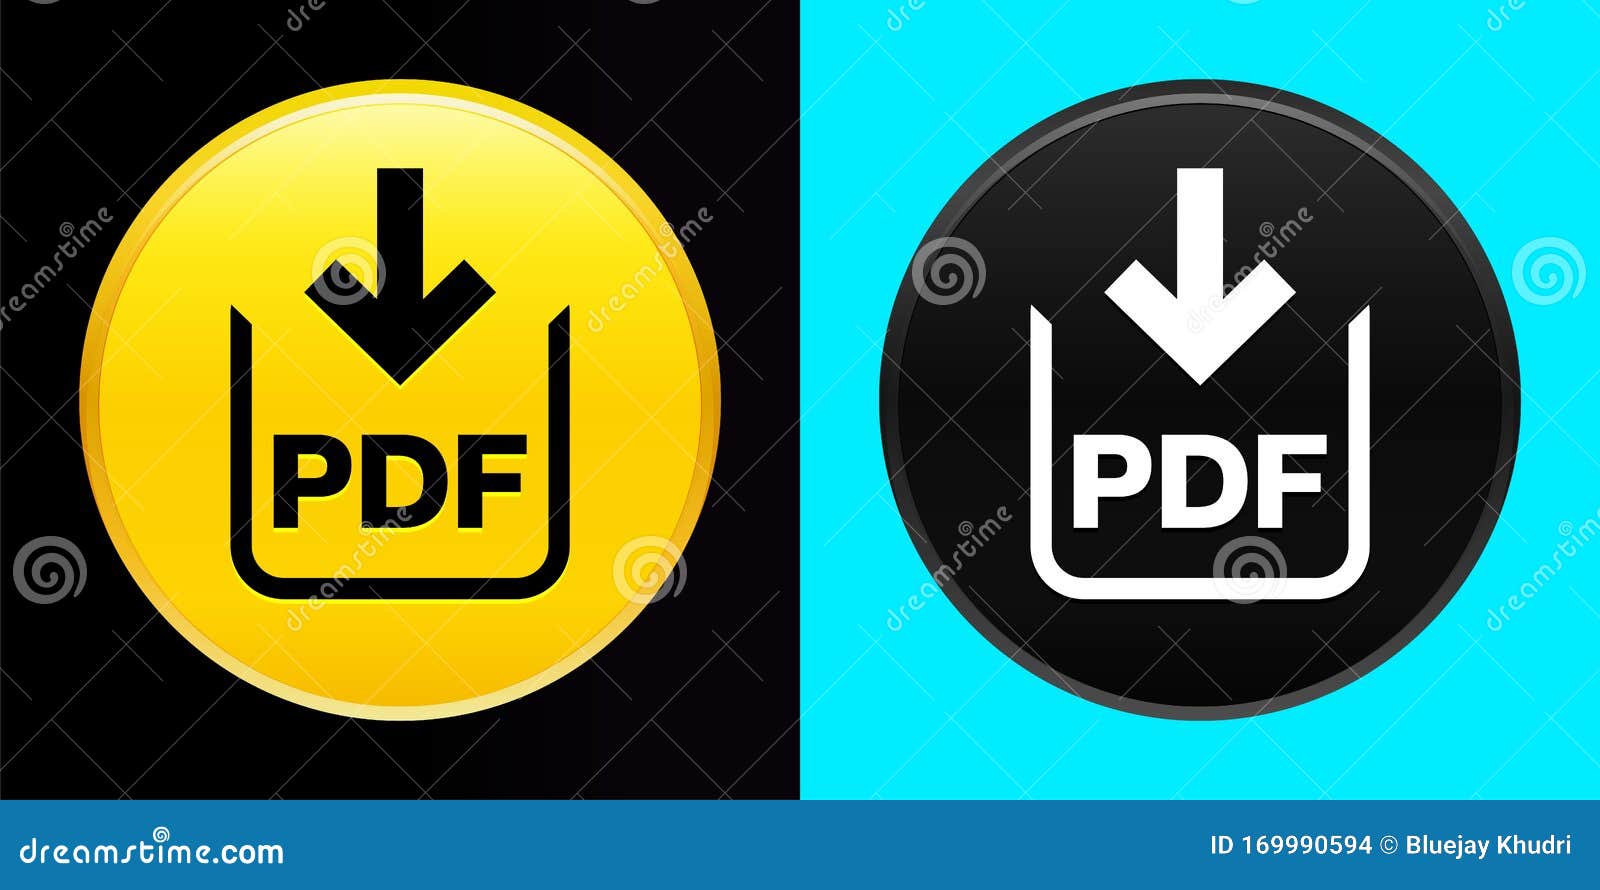 divi download pdf button